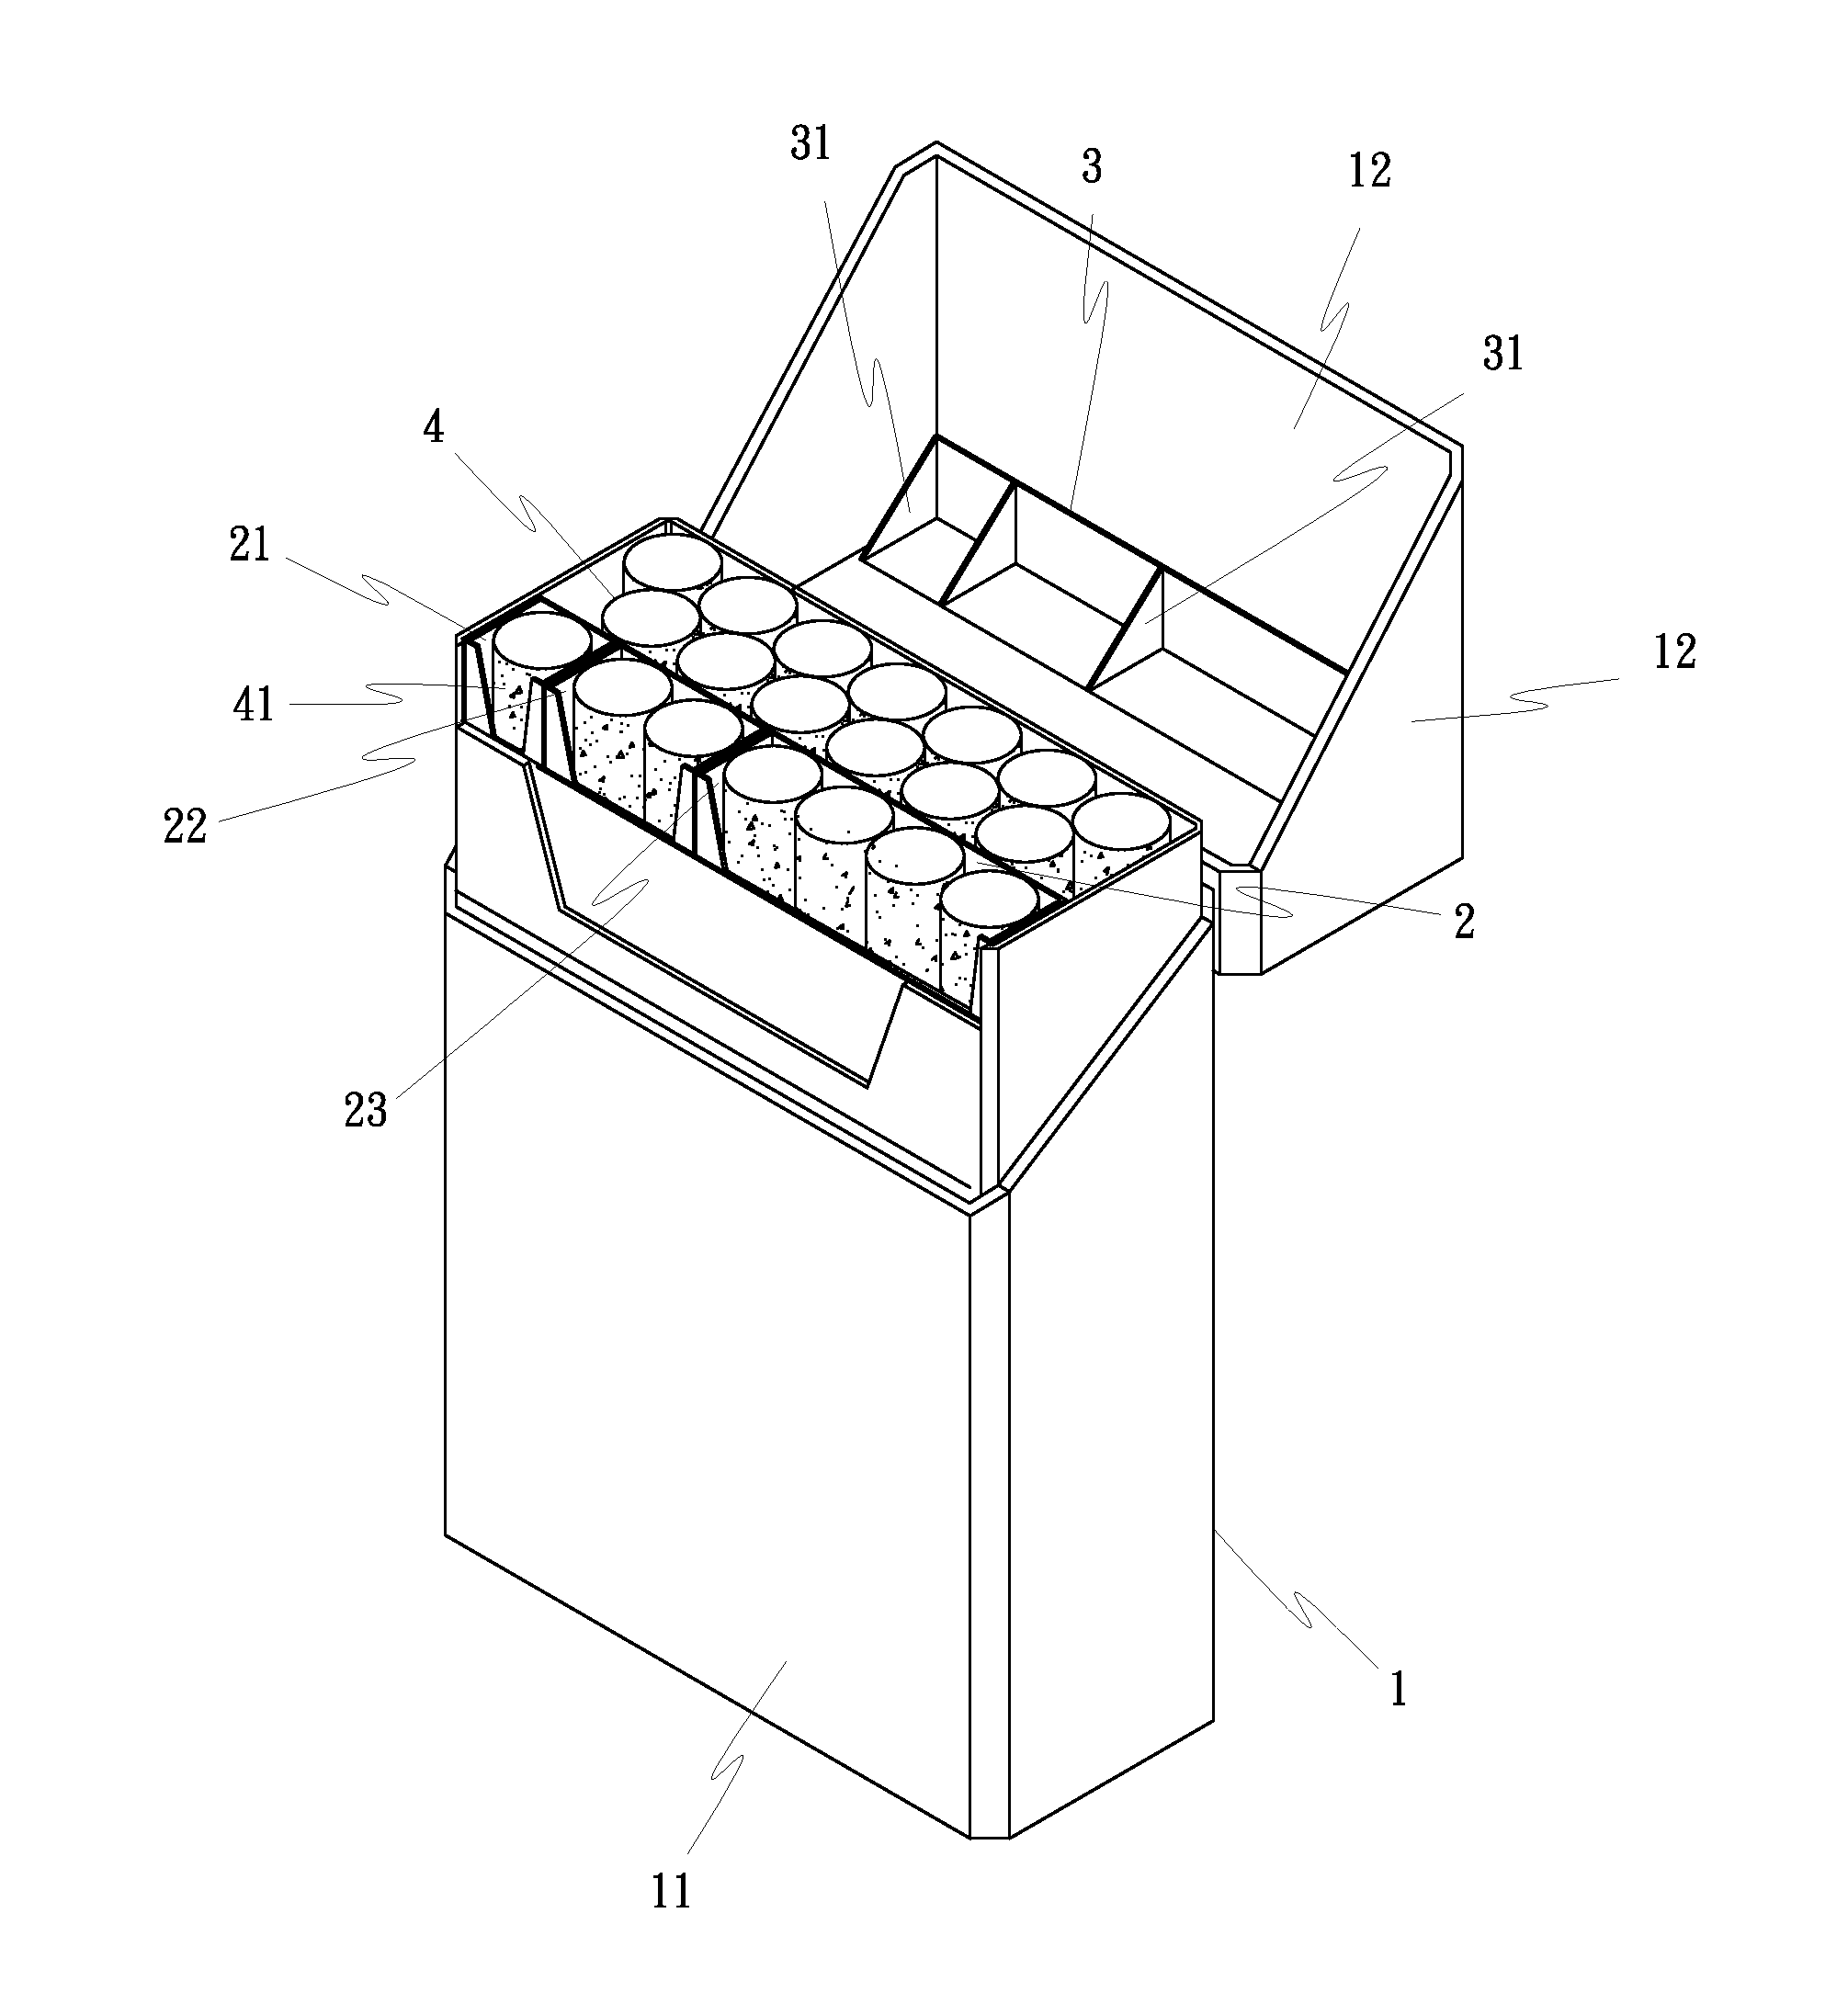 Cigarette box structure capable of receiving cigarette butts